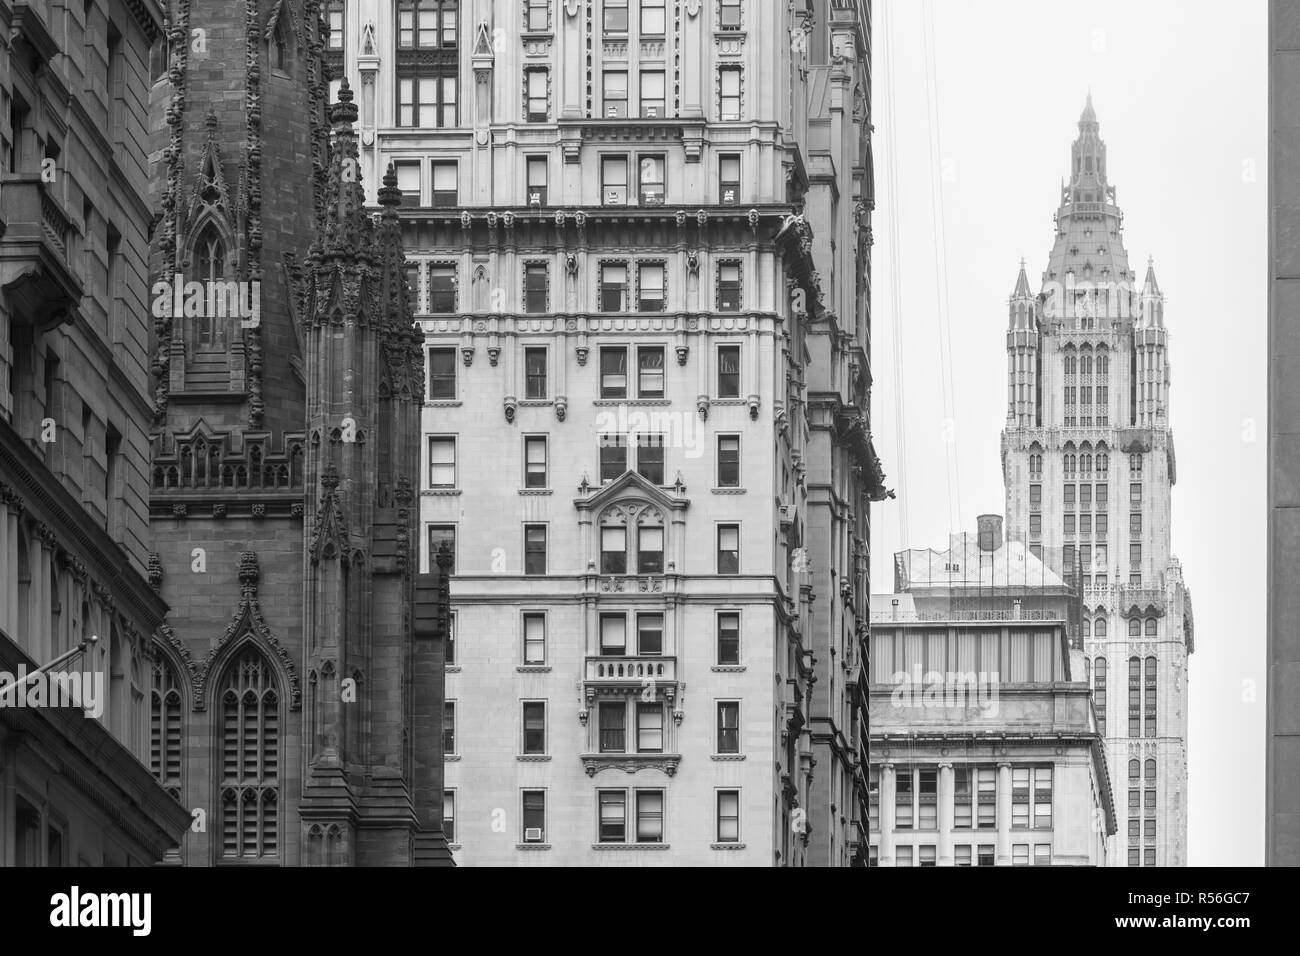 New York City, Lower Manhattan, skyscrapers on Broadway street. Stock Photo